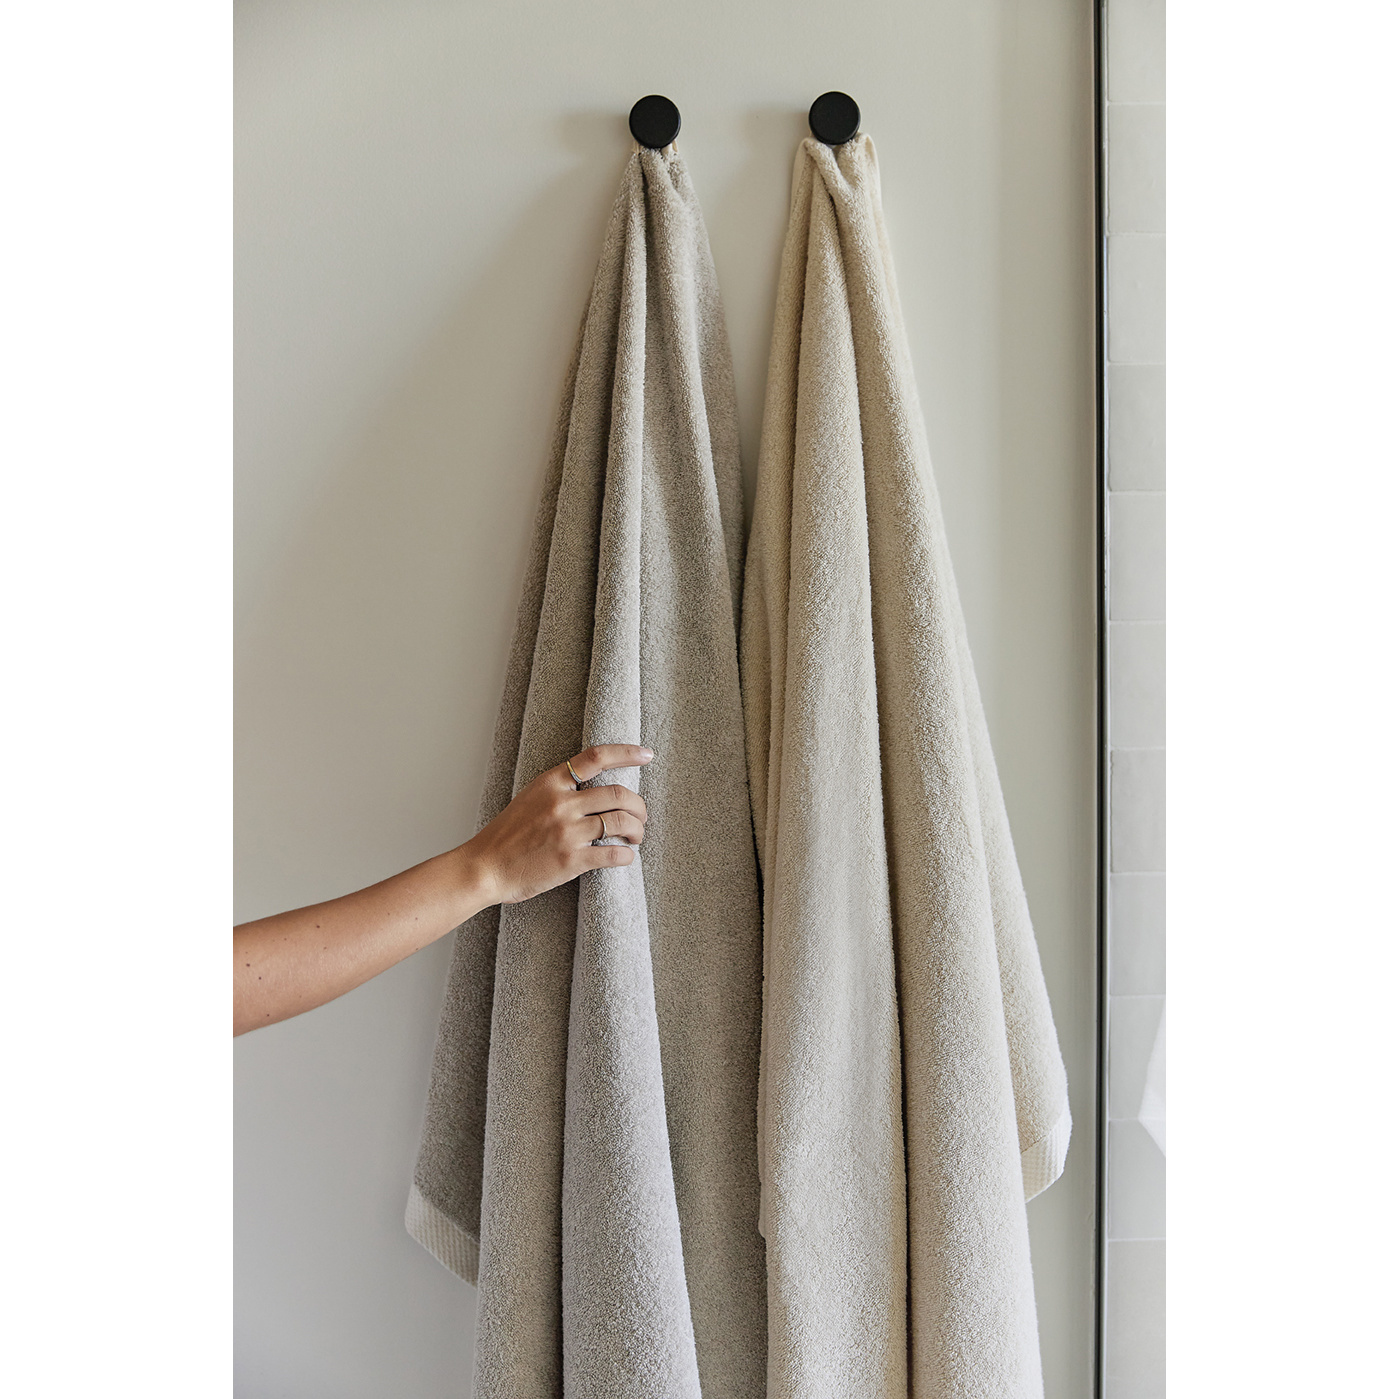 Torres Novas 1845 Bath towel DO ZERO, Gray - 150 x 100 cm - 100% Cotton